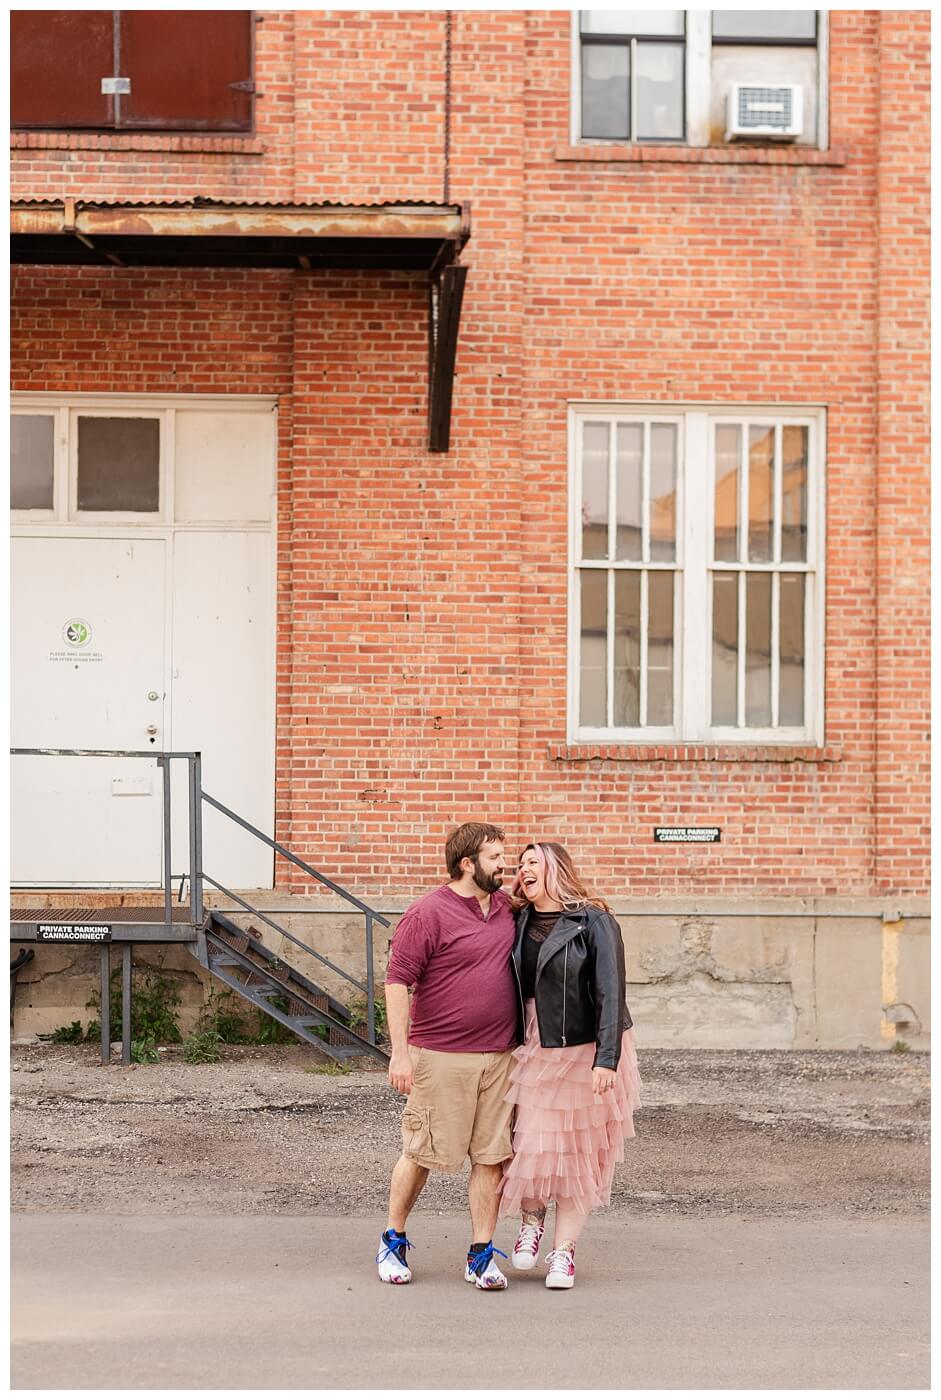 TJ & Danielle - Regina Warehouse District - 01 - Couple laughs in alley